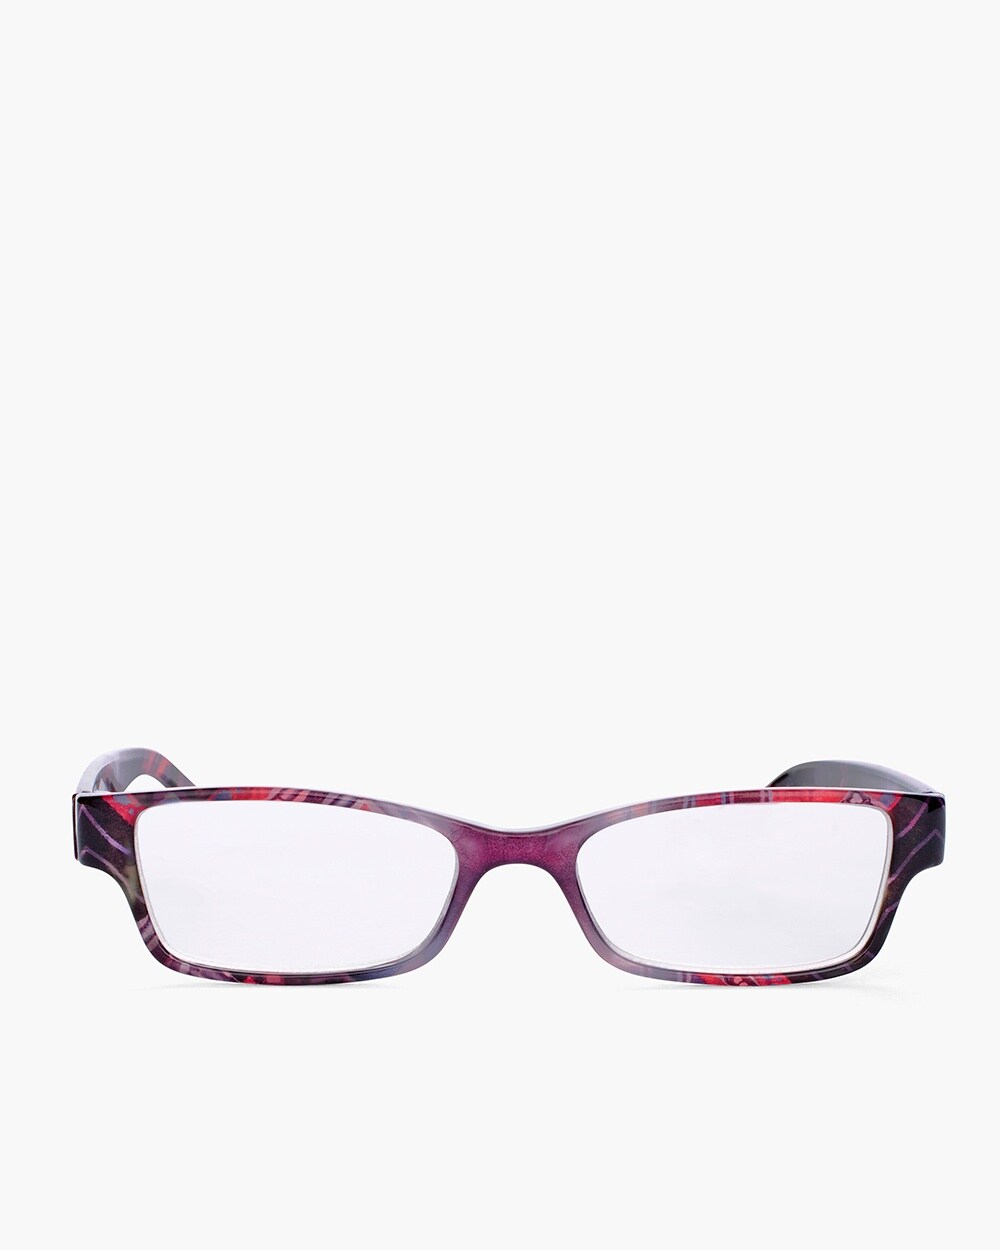 Red Geometric Reading Glasses